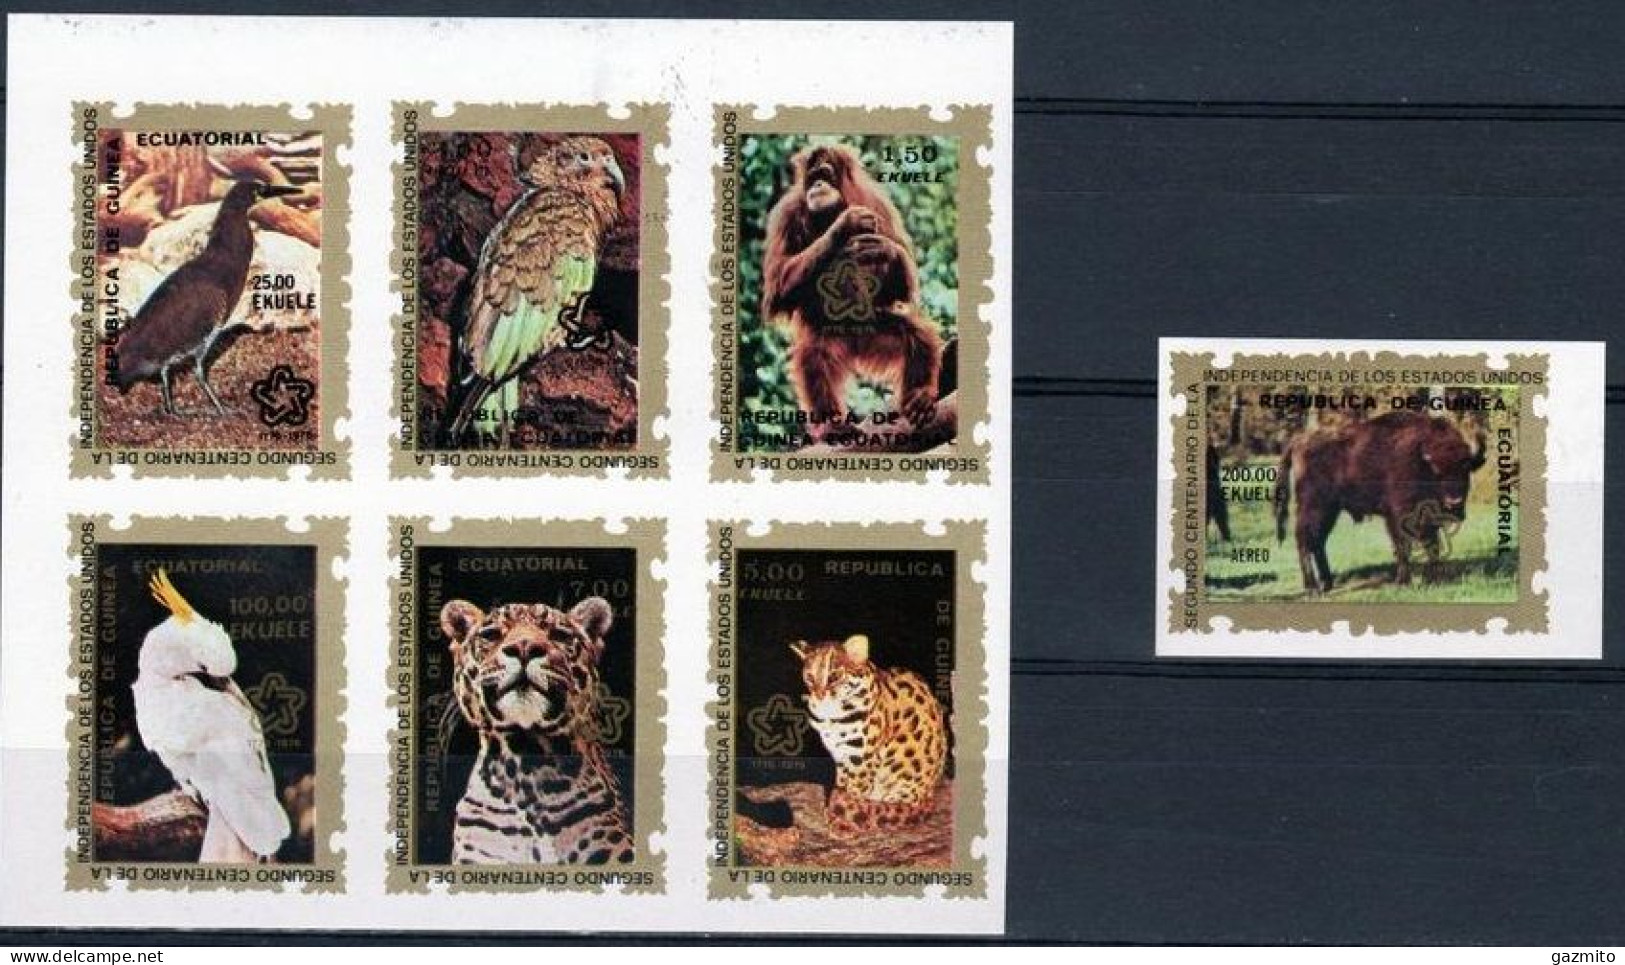 Guinea Equat. 1976, Bird, Parrot, Gorilla, Leopard, Bisont, 7val IMPERFORATED - Gorilla